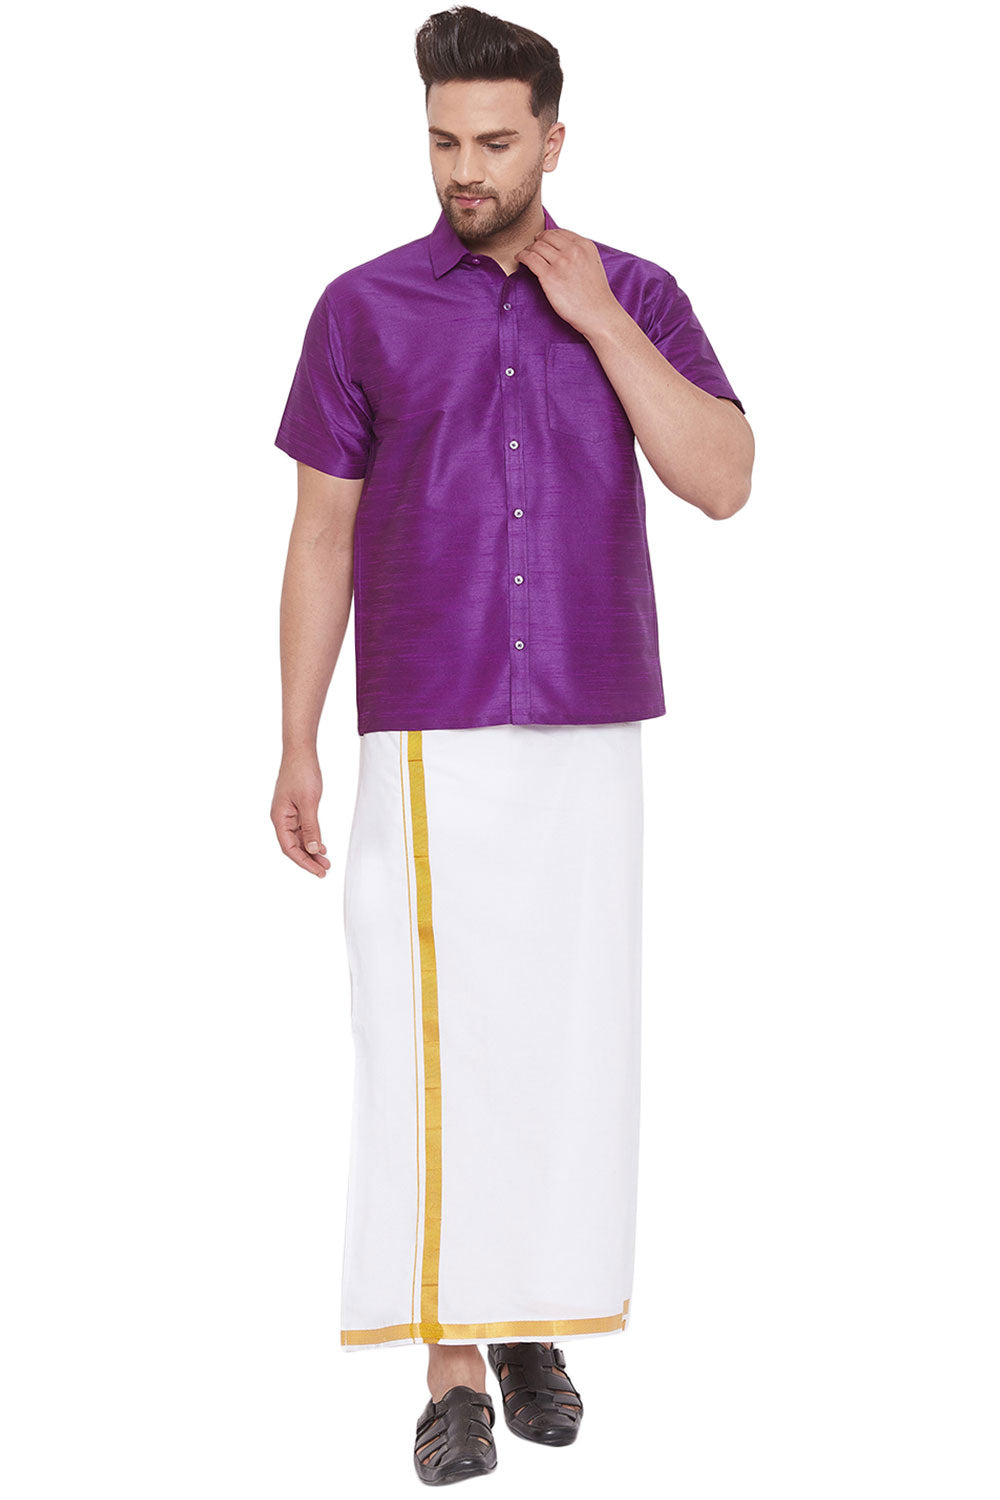 Buy Art Silk Solid Shirt and Mundu in Purple